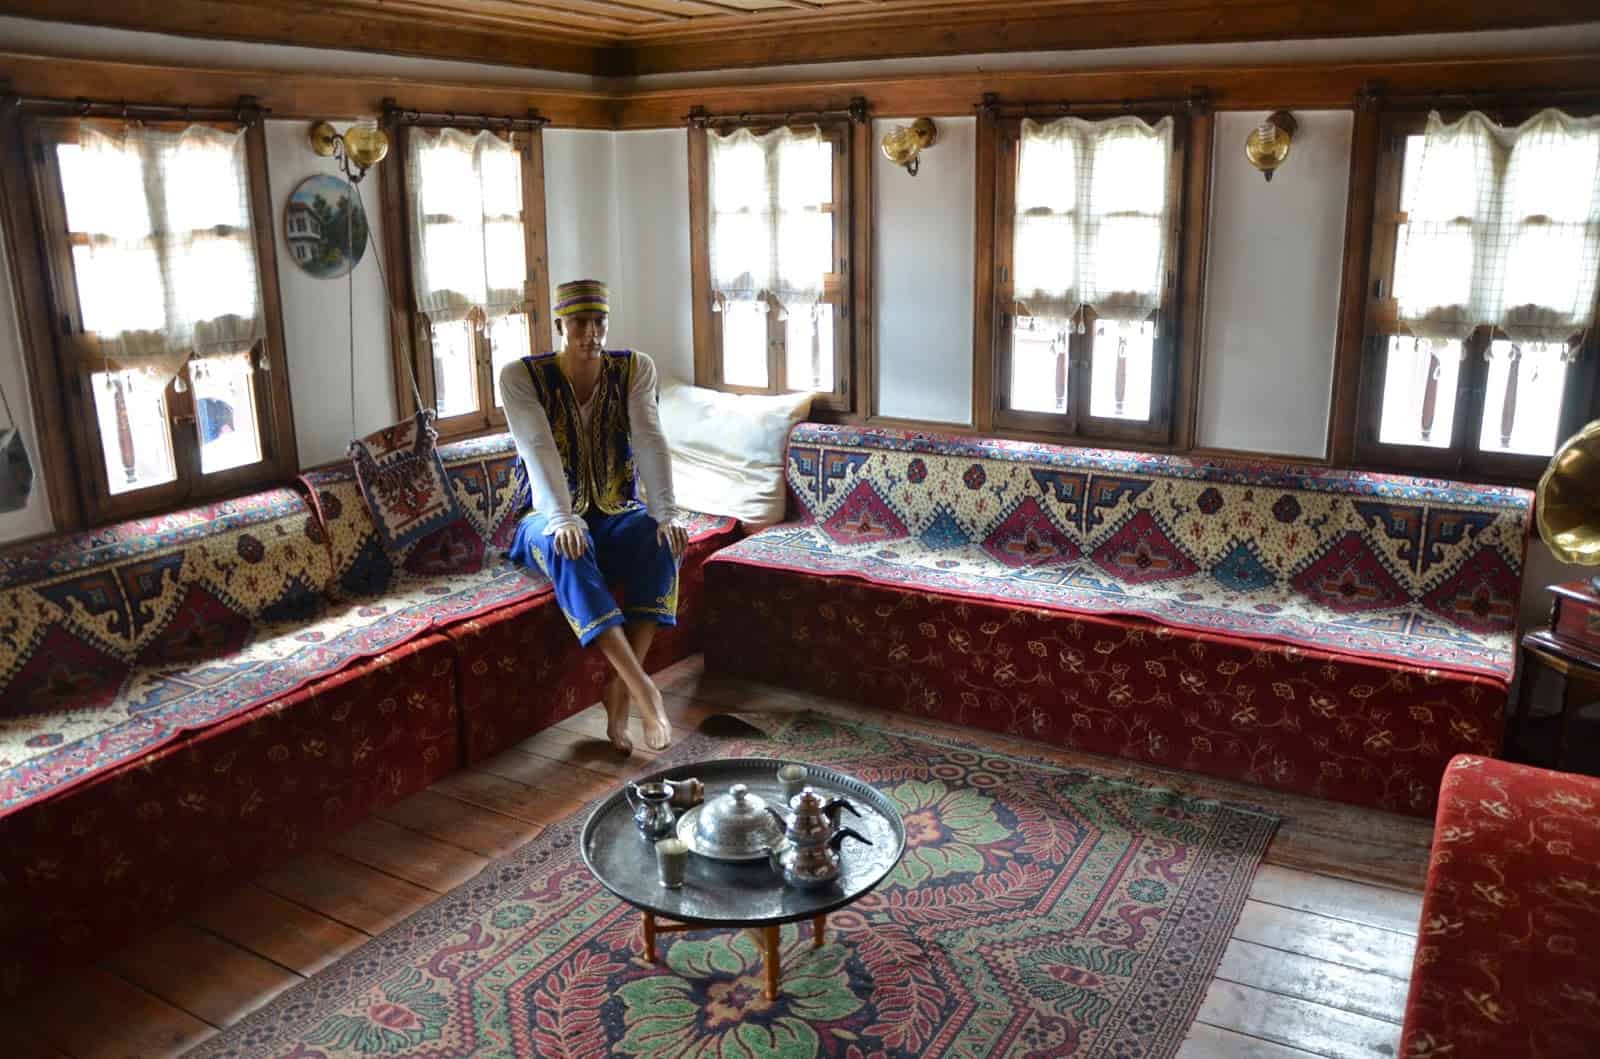 Living room of an Ottoman home in Safranbolu, Turkey